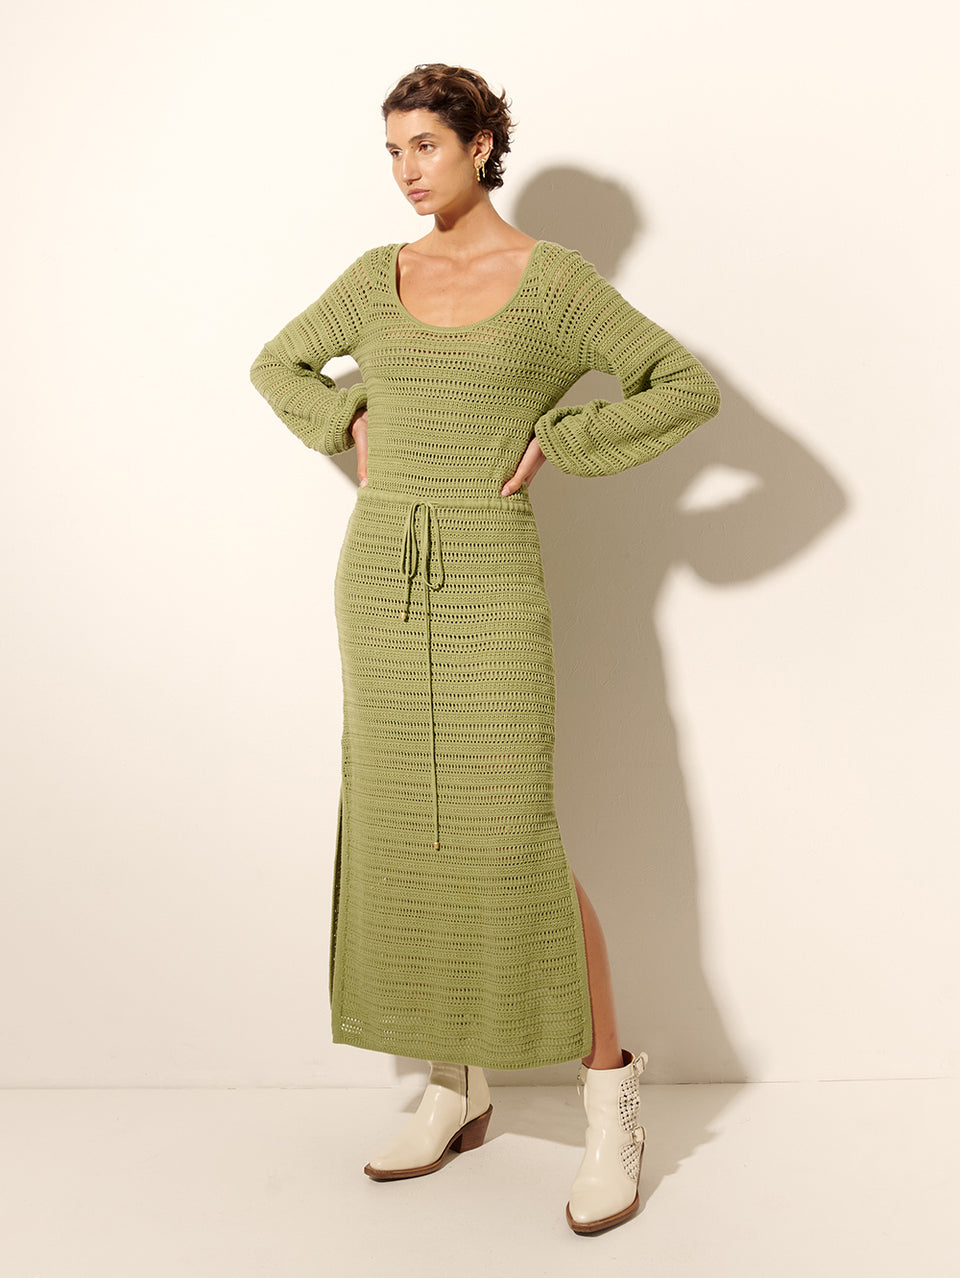 Pepe Knit Dress Avocado KIVARI | Model wears avocado green knit maxi dress side view